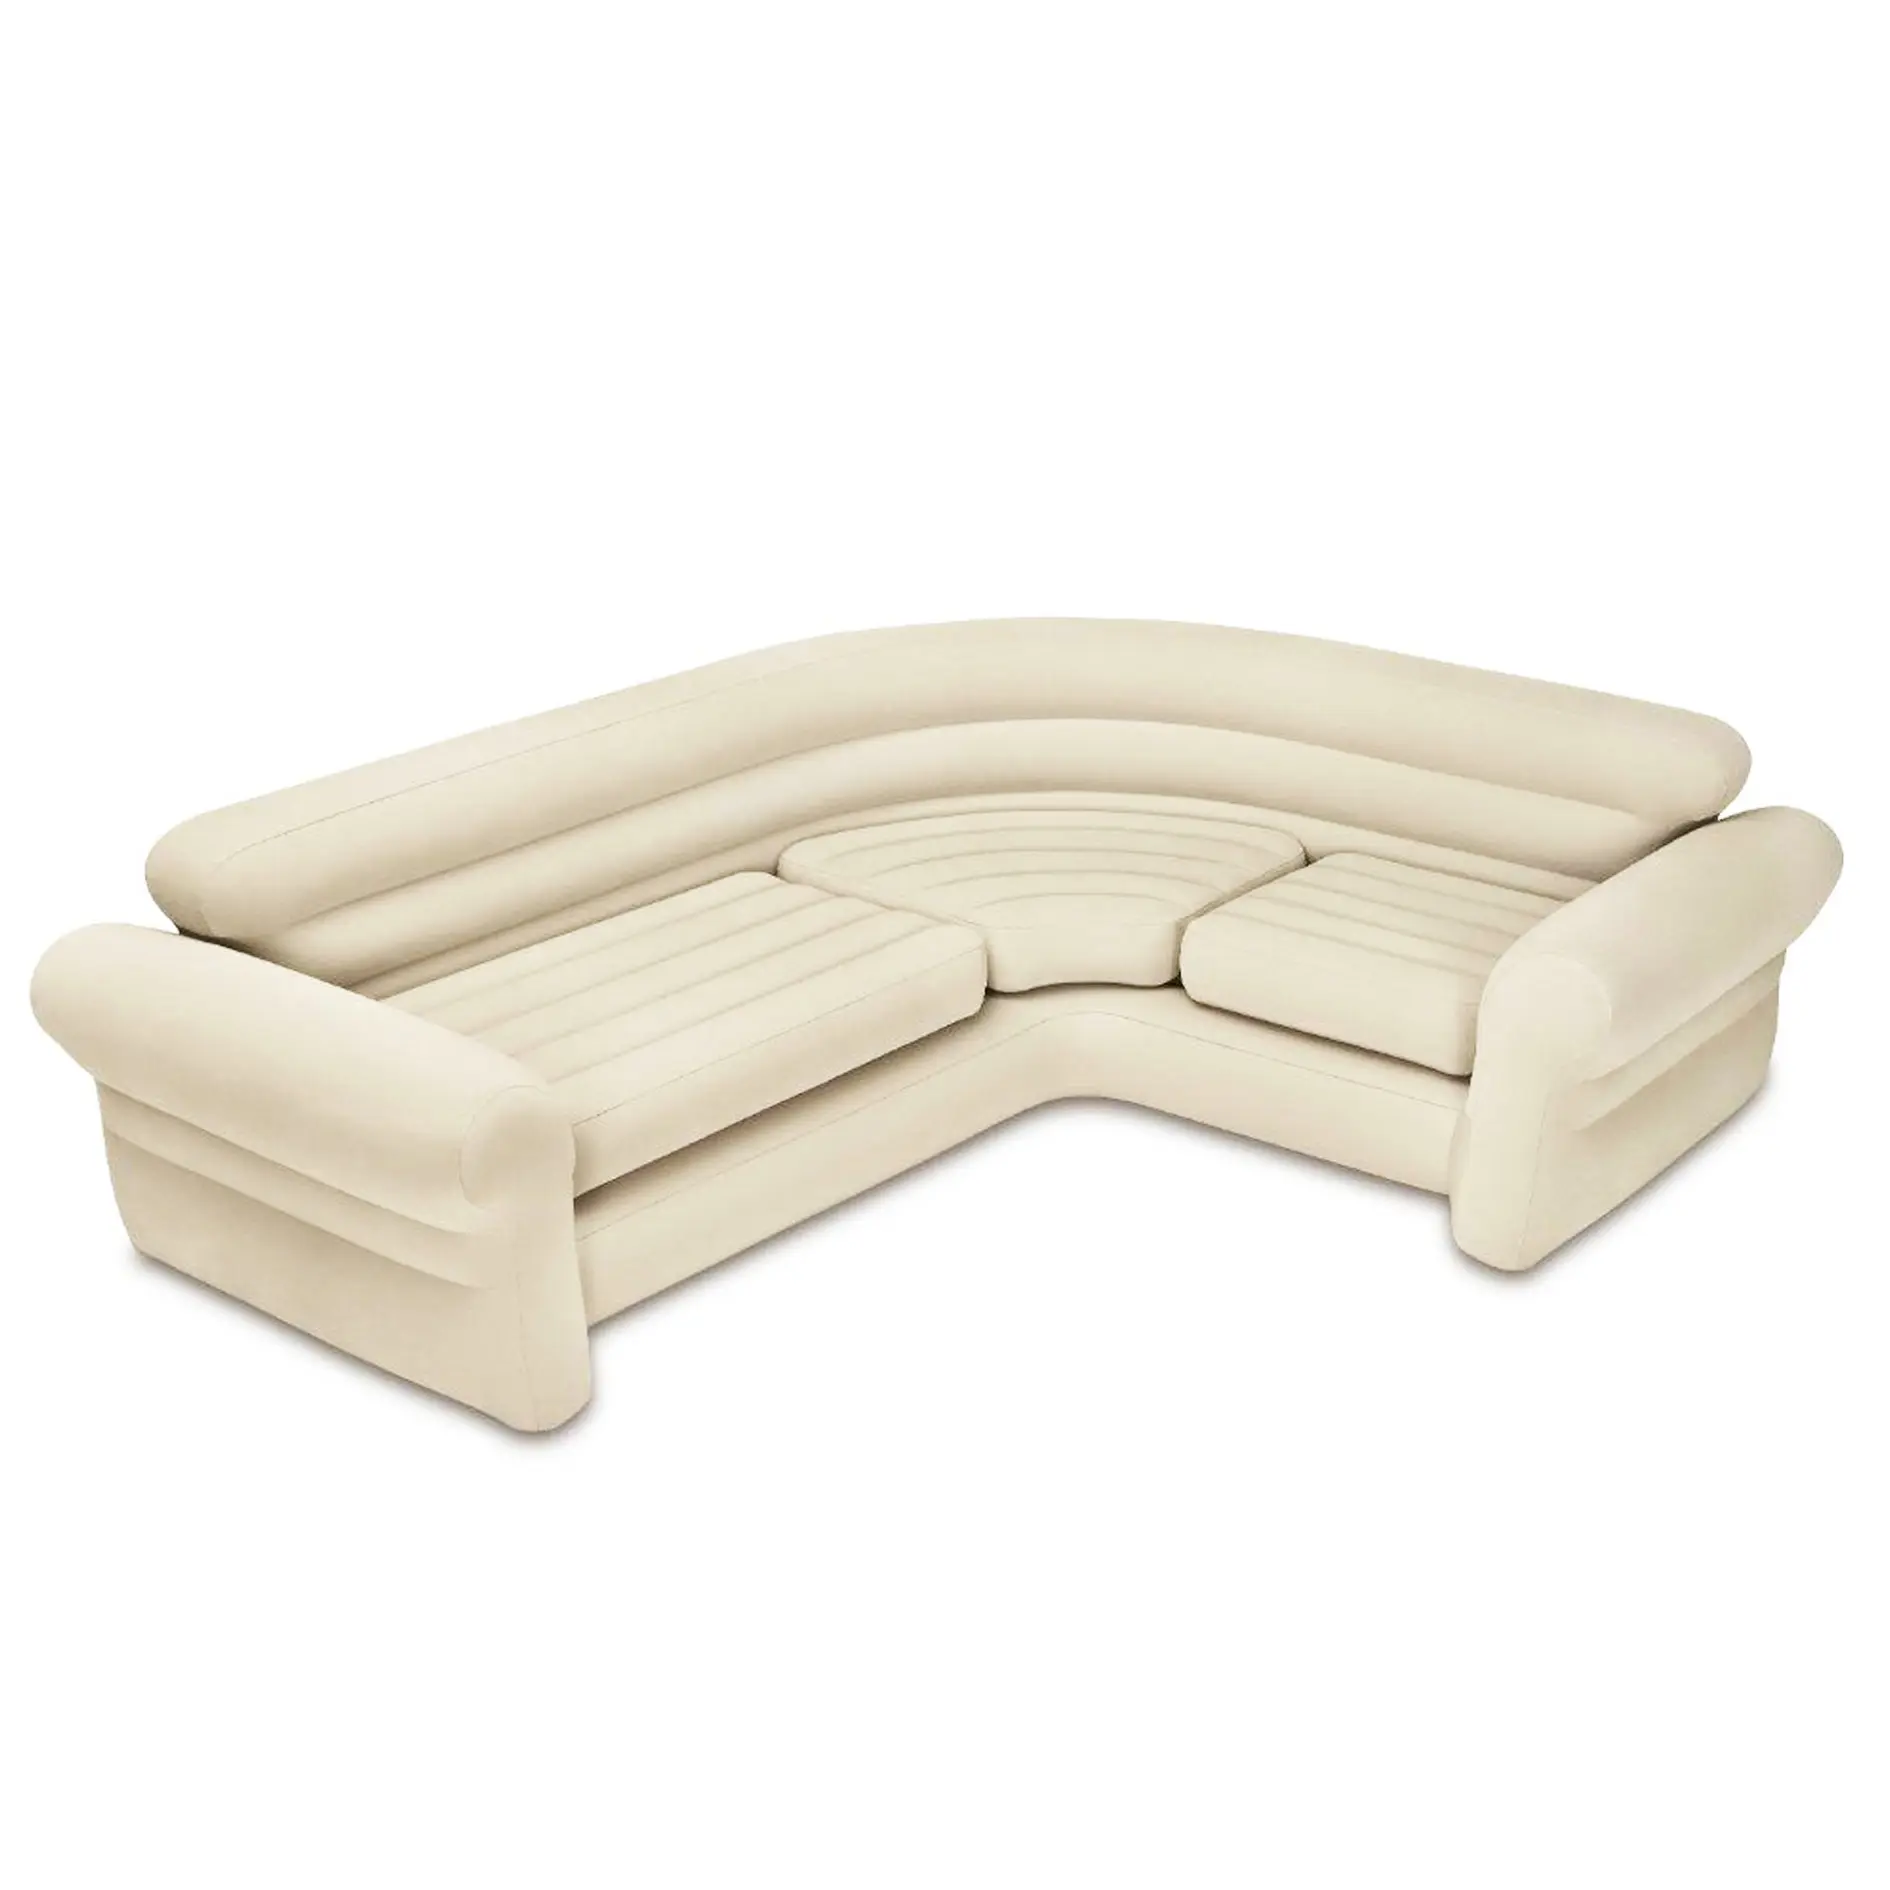 Hot selling inflatable corner sofa large capacity sofa convenient folding recliner sofa bed